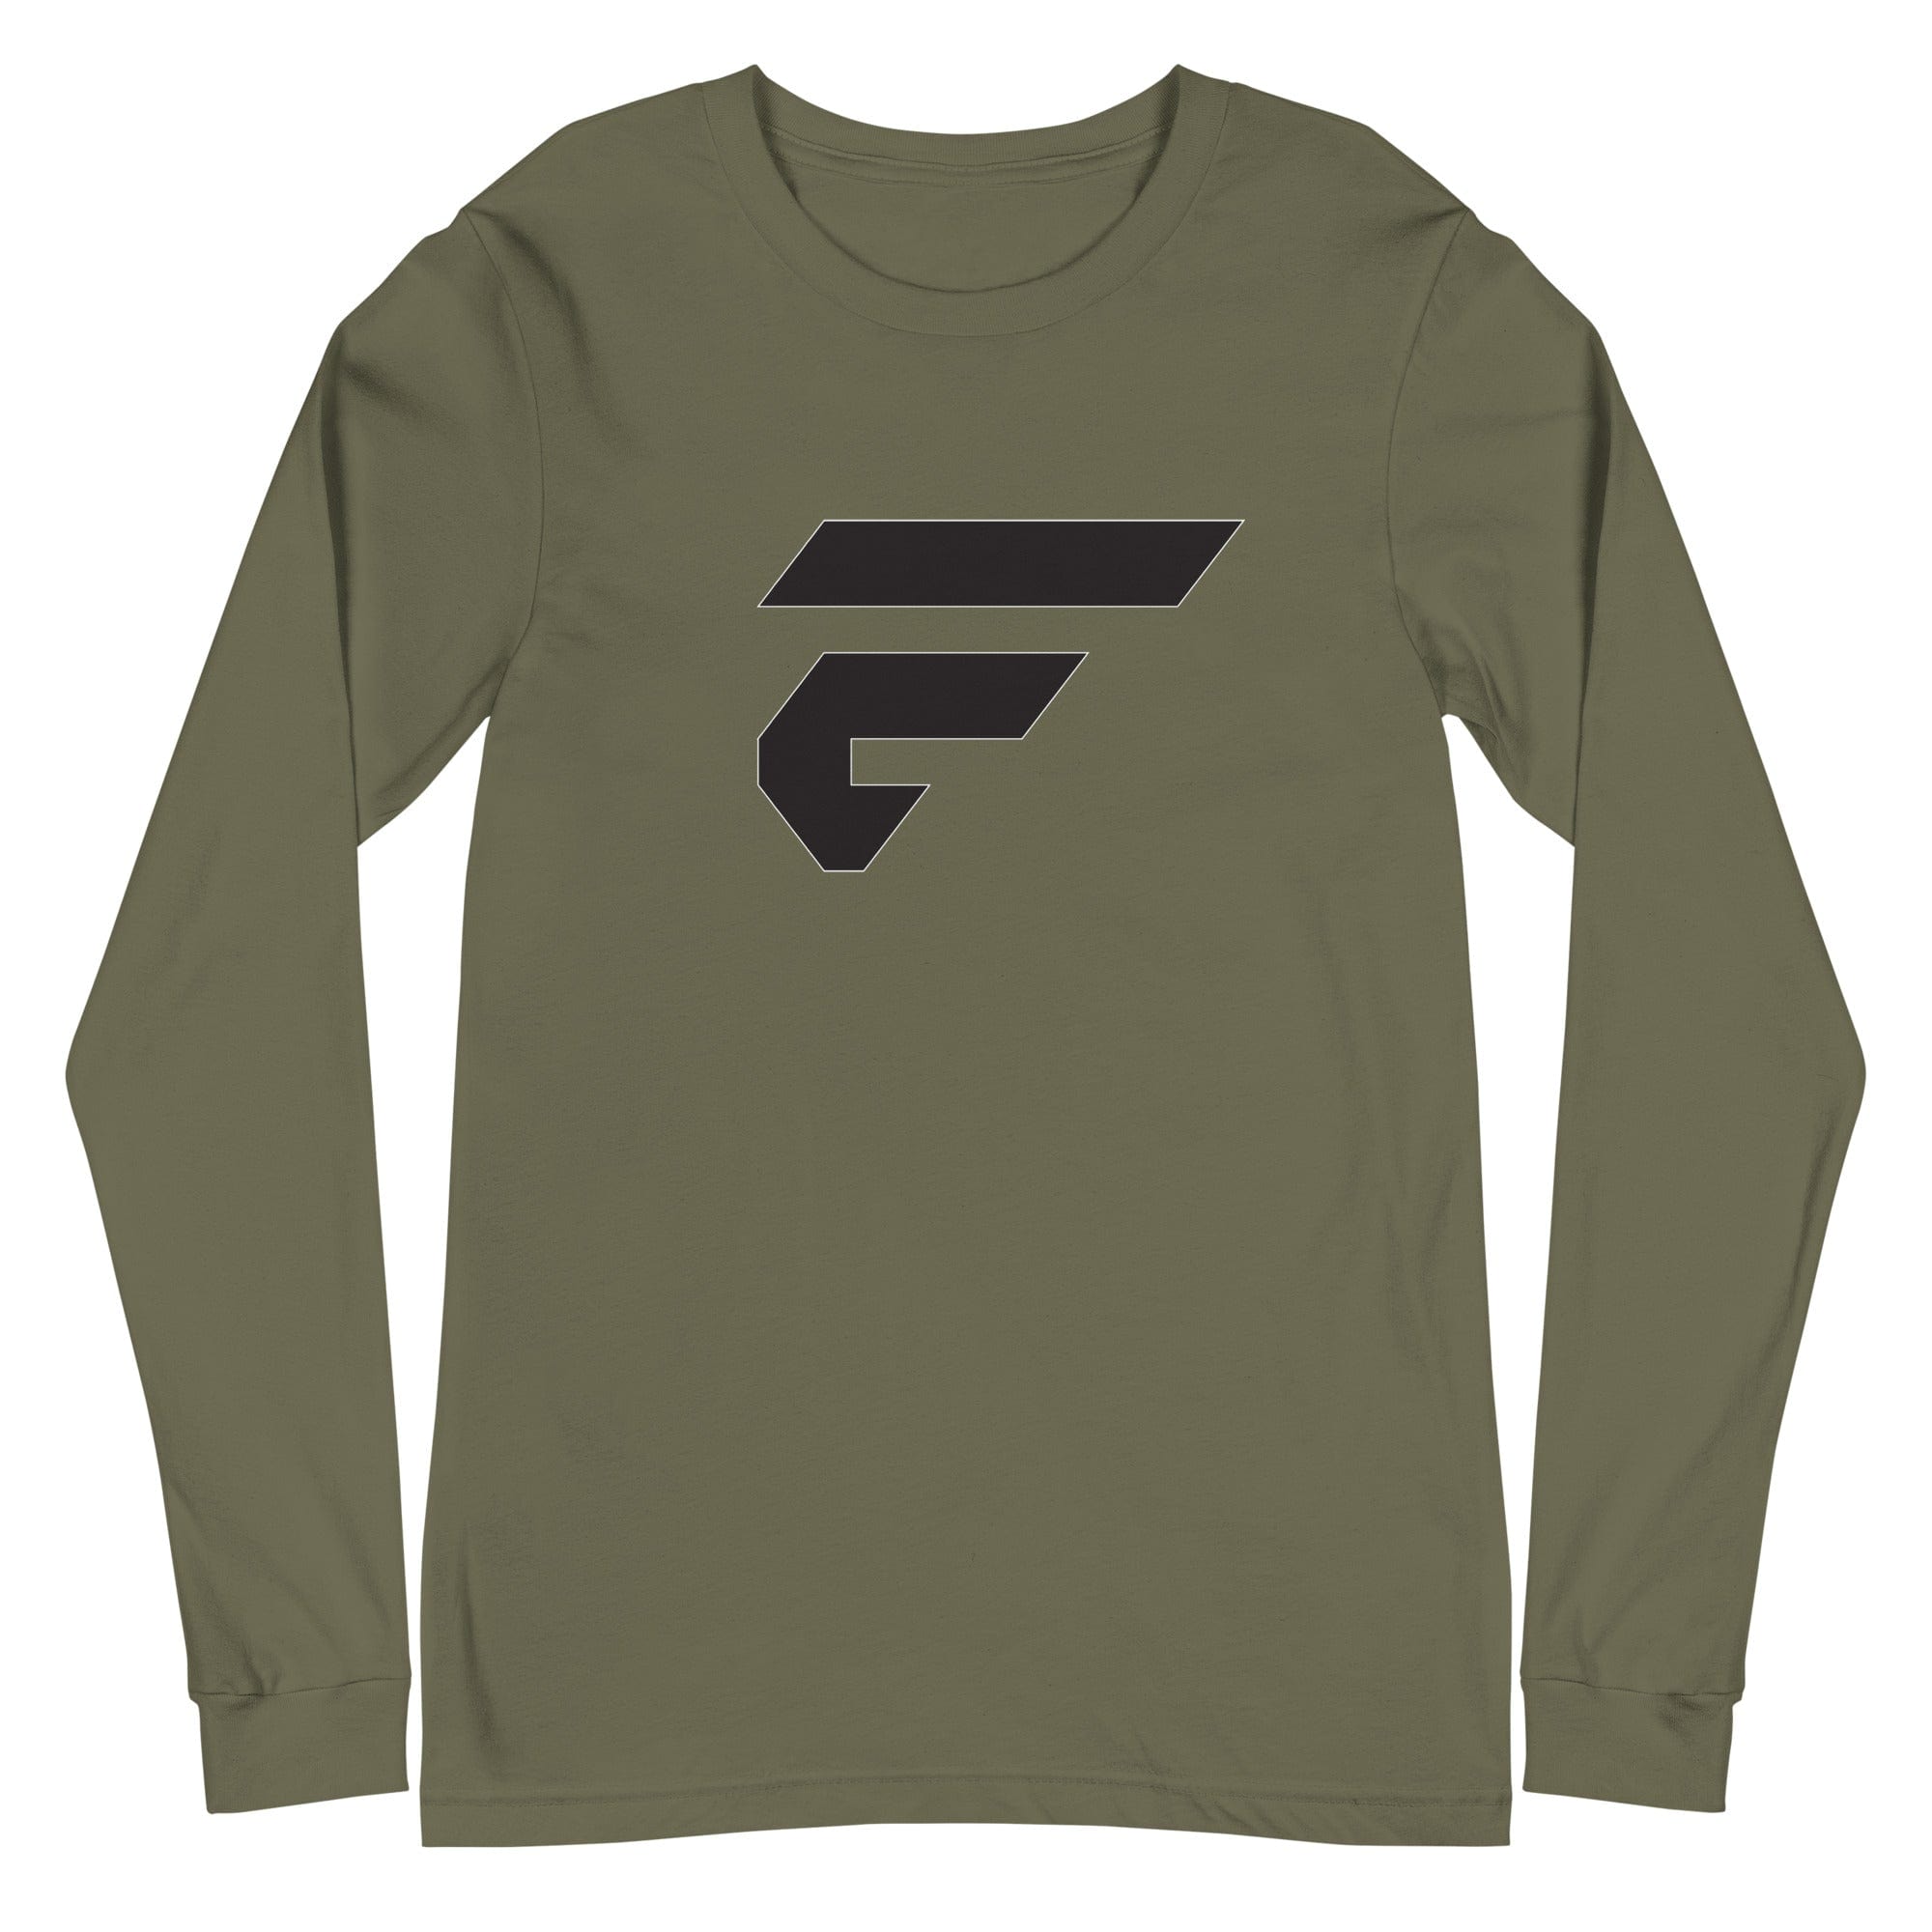 Forest green unisex cotton longsleeve shirt with Fire Cornhole F logo in black